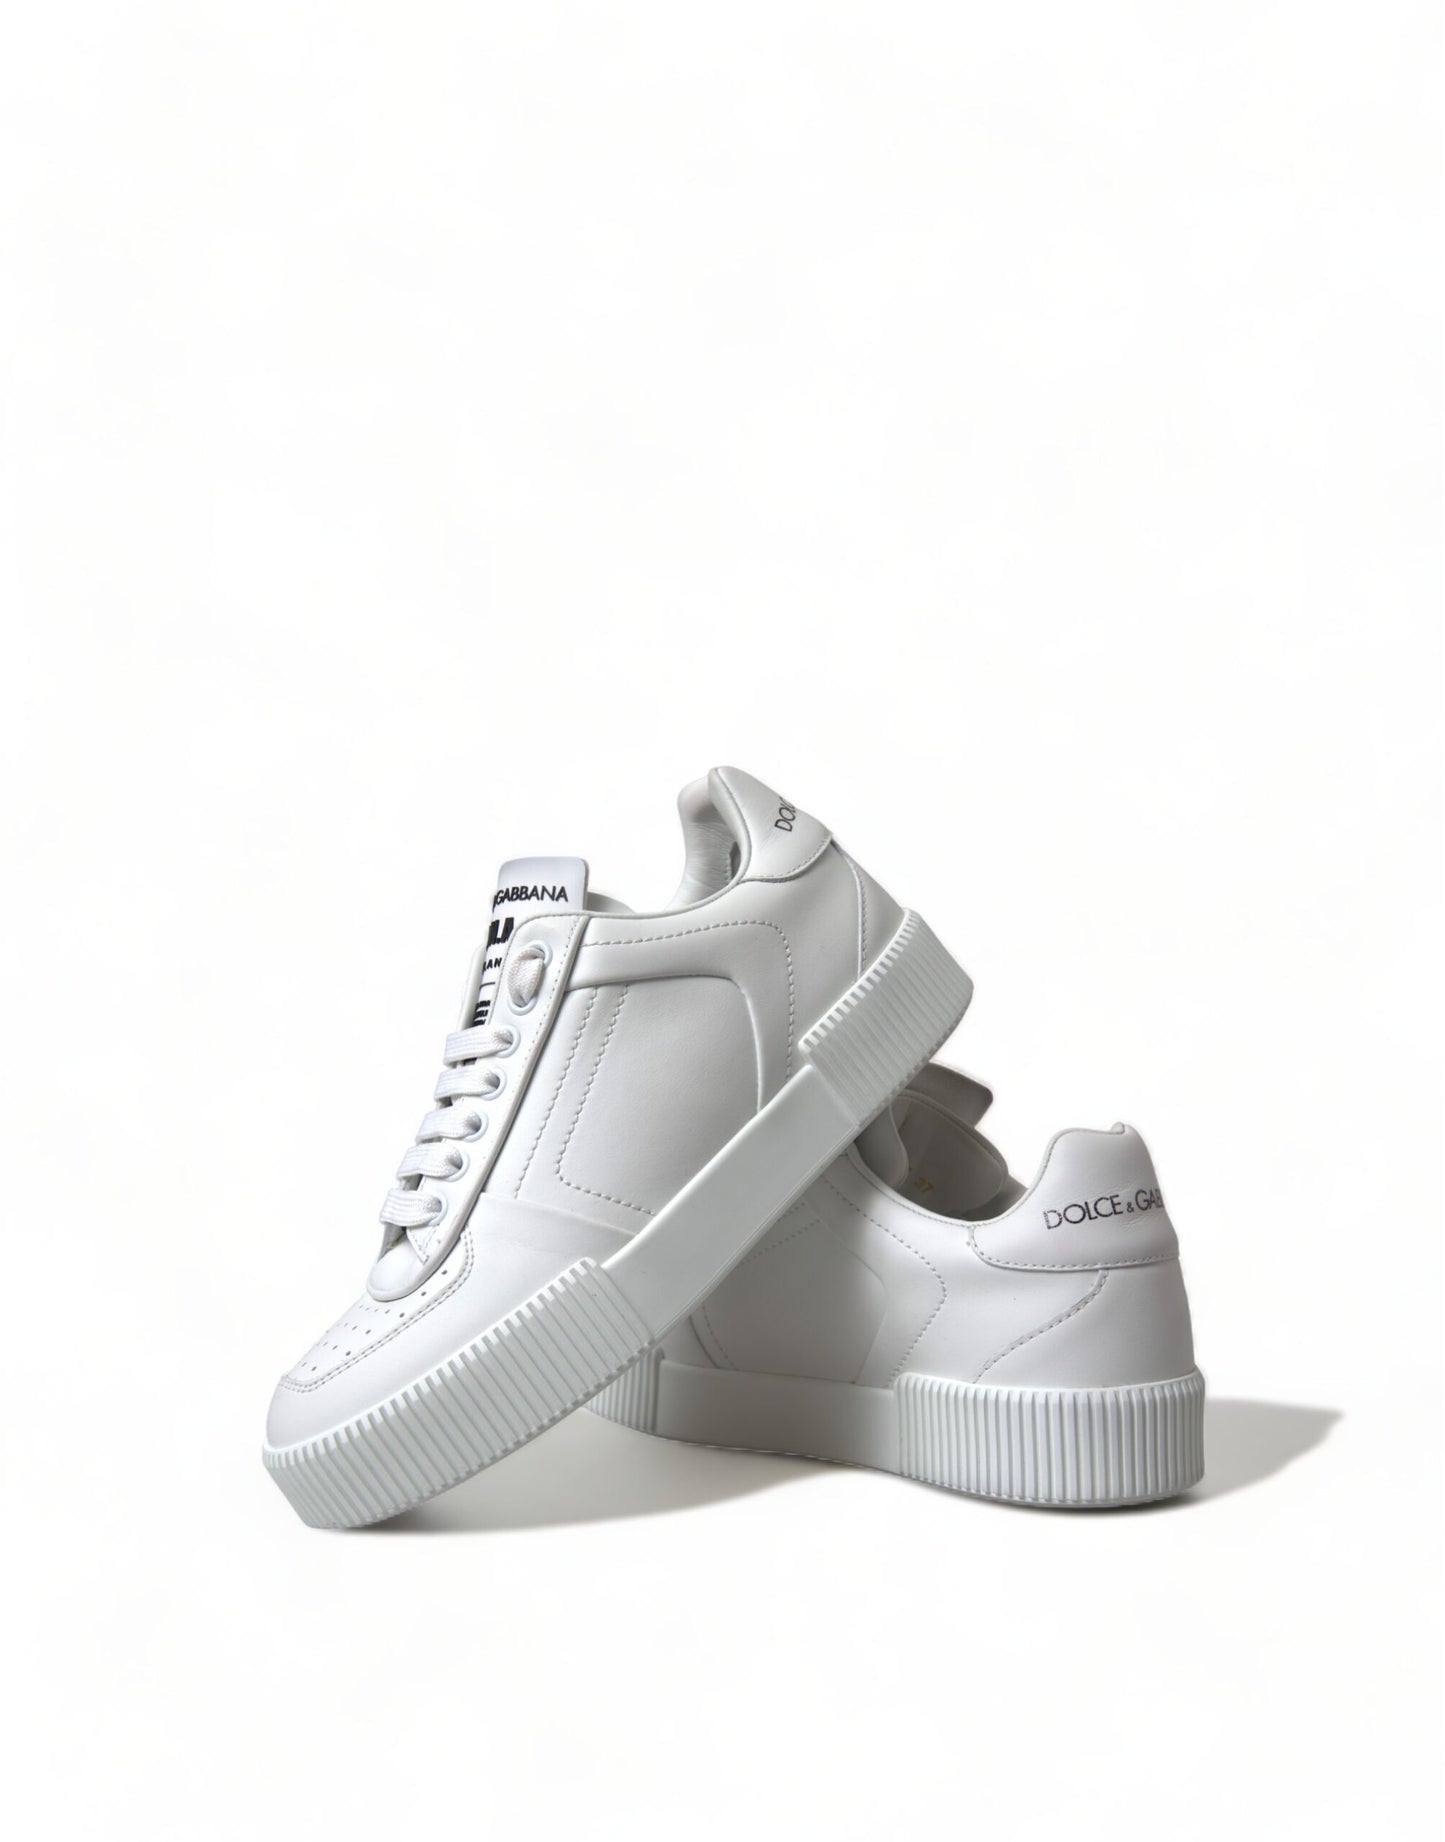 Dolce & Gabbana Elegant White Miami Lace-Up Sneakers